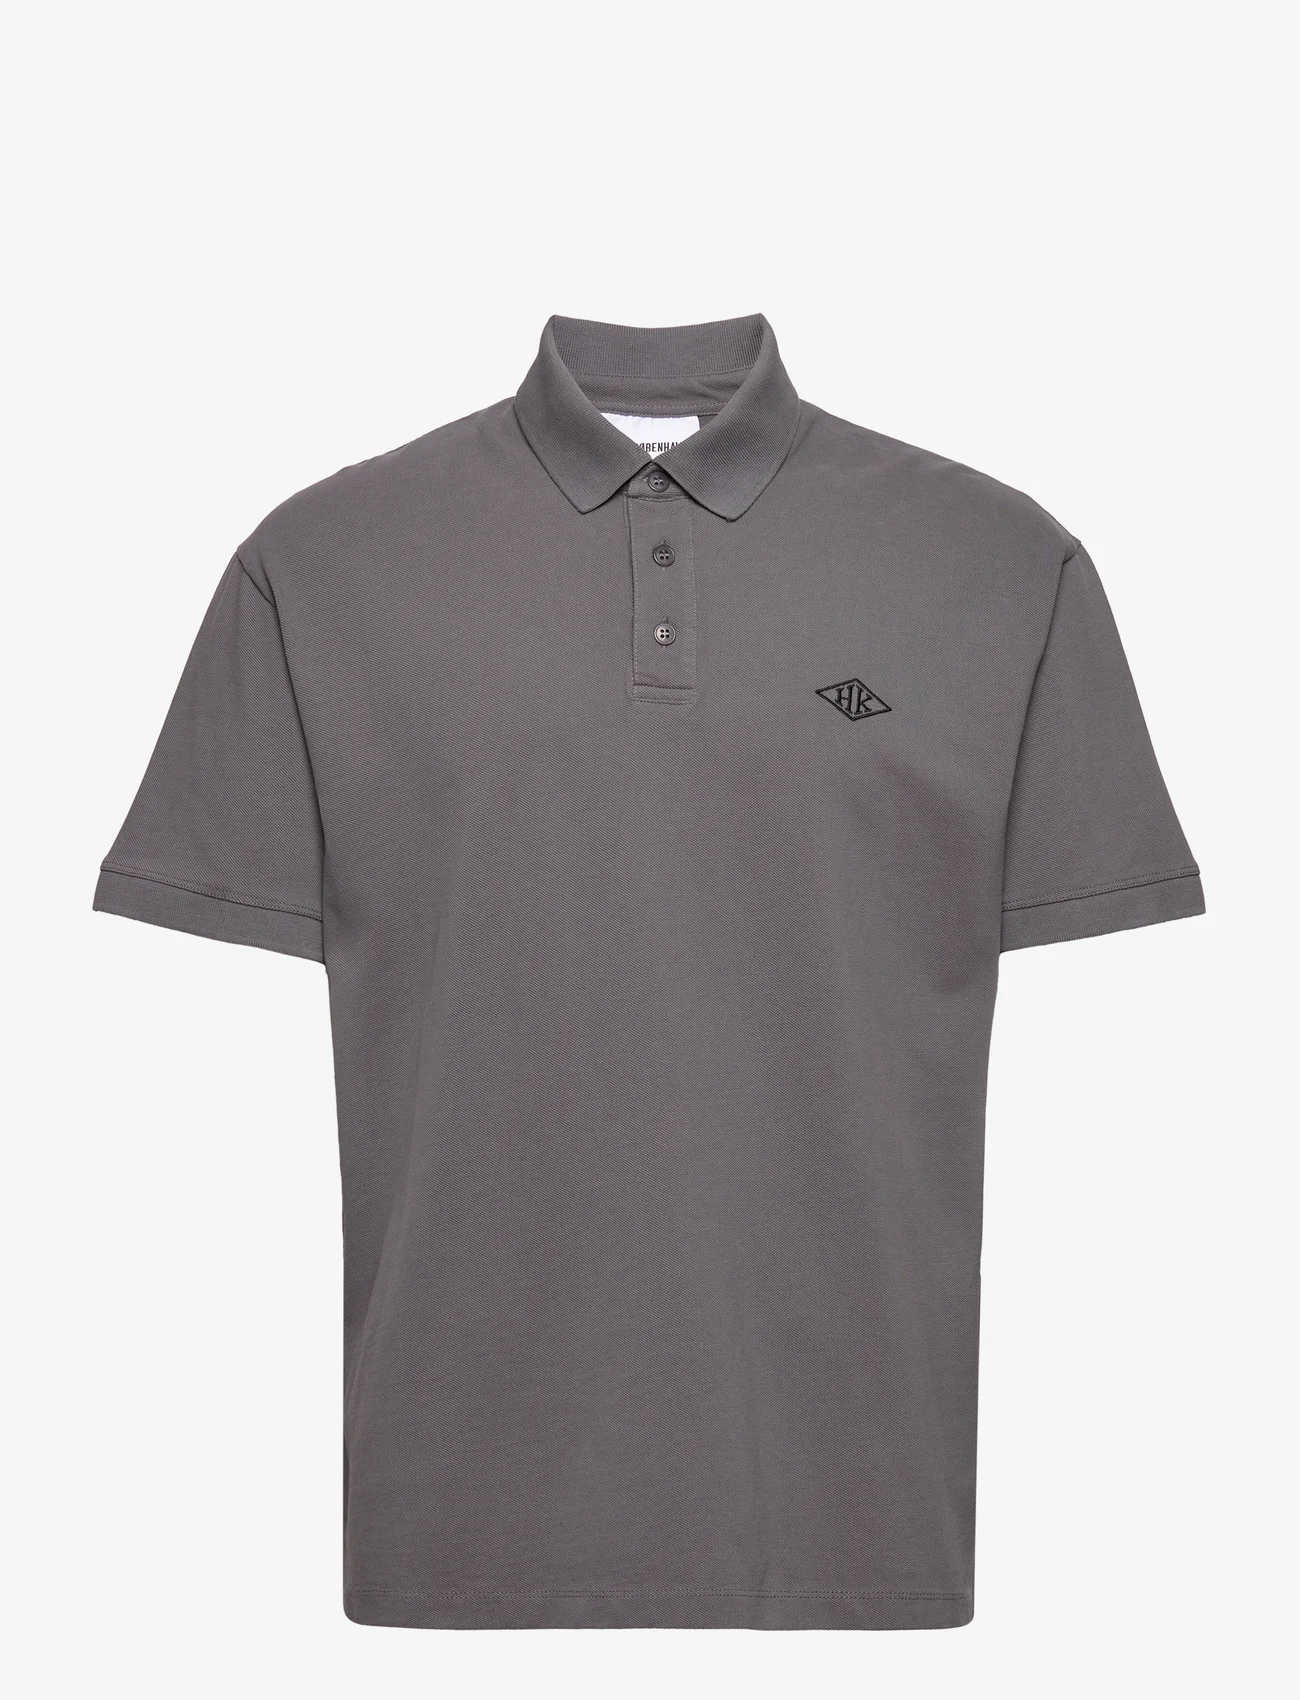 HAN Kjøbenhavn - Polo Shirt Short Sleeve - kurzärmelig - steel grey - 0